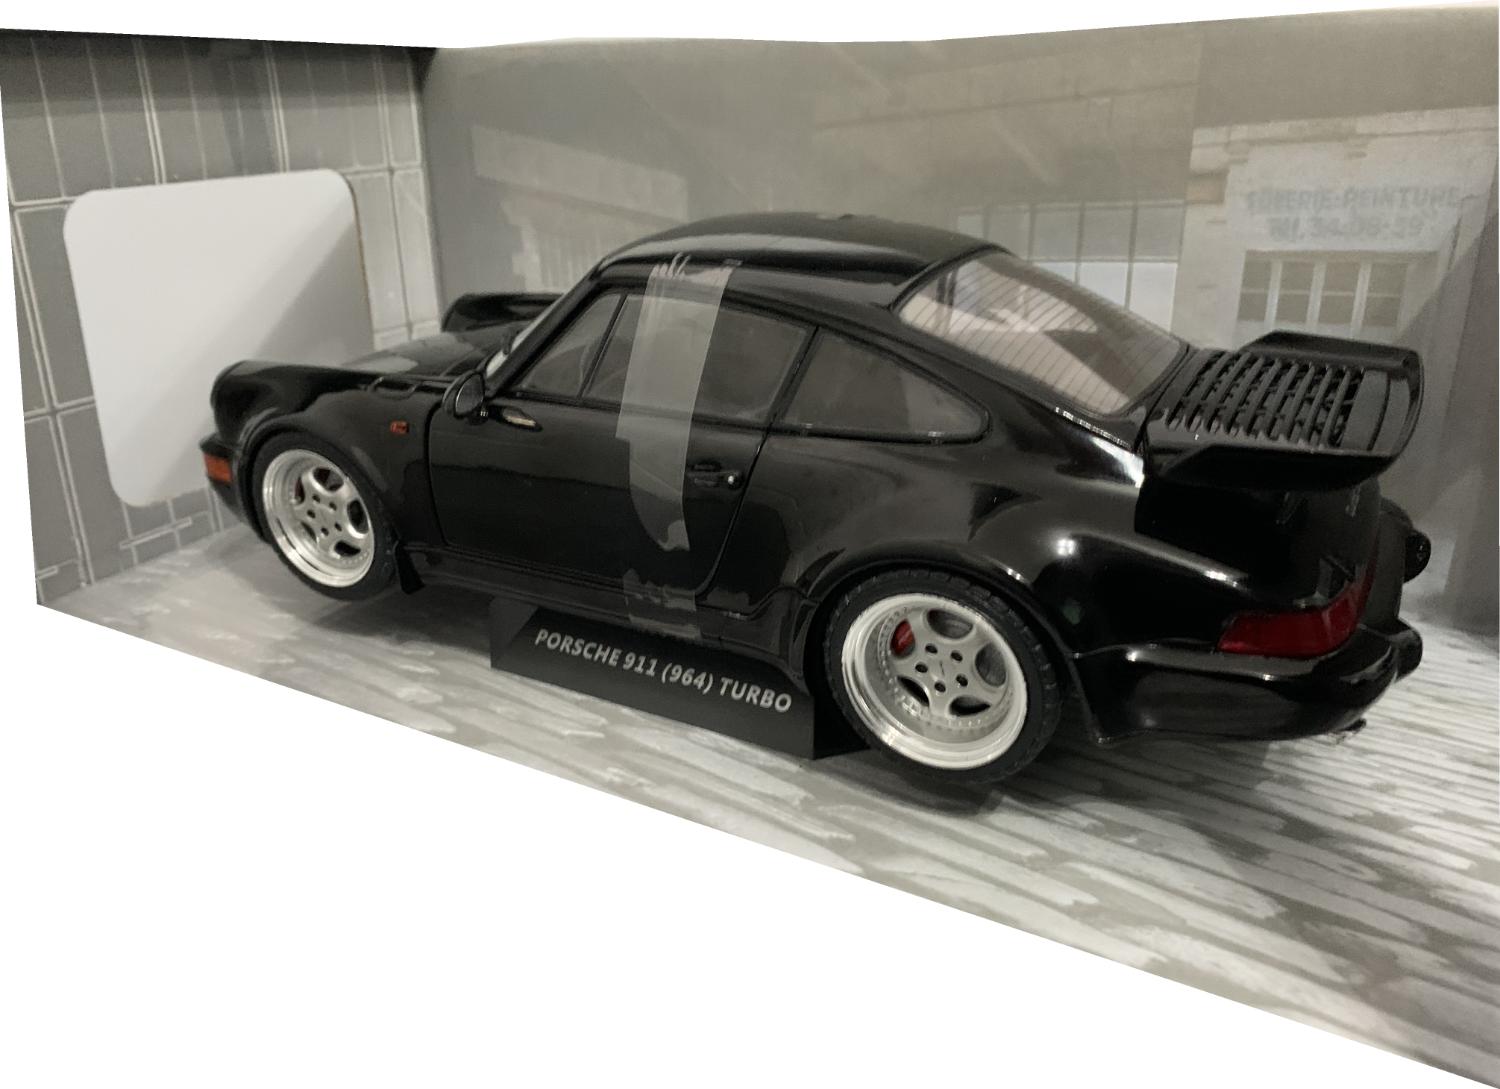 Porsche 911 (964) Turbo 1993 in black 1:18 scale model from Solido